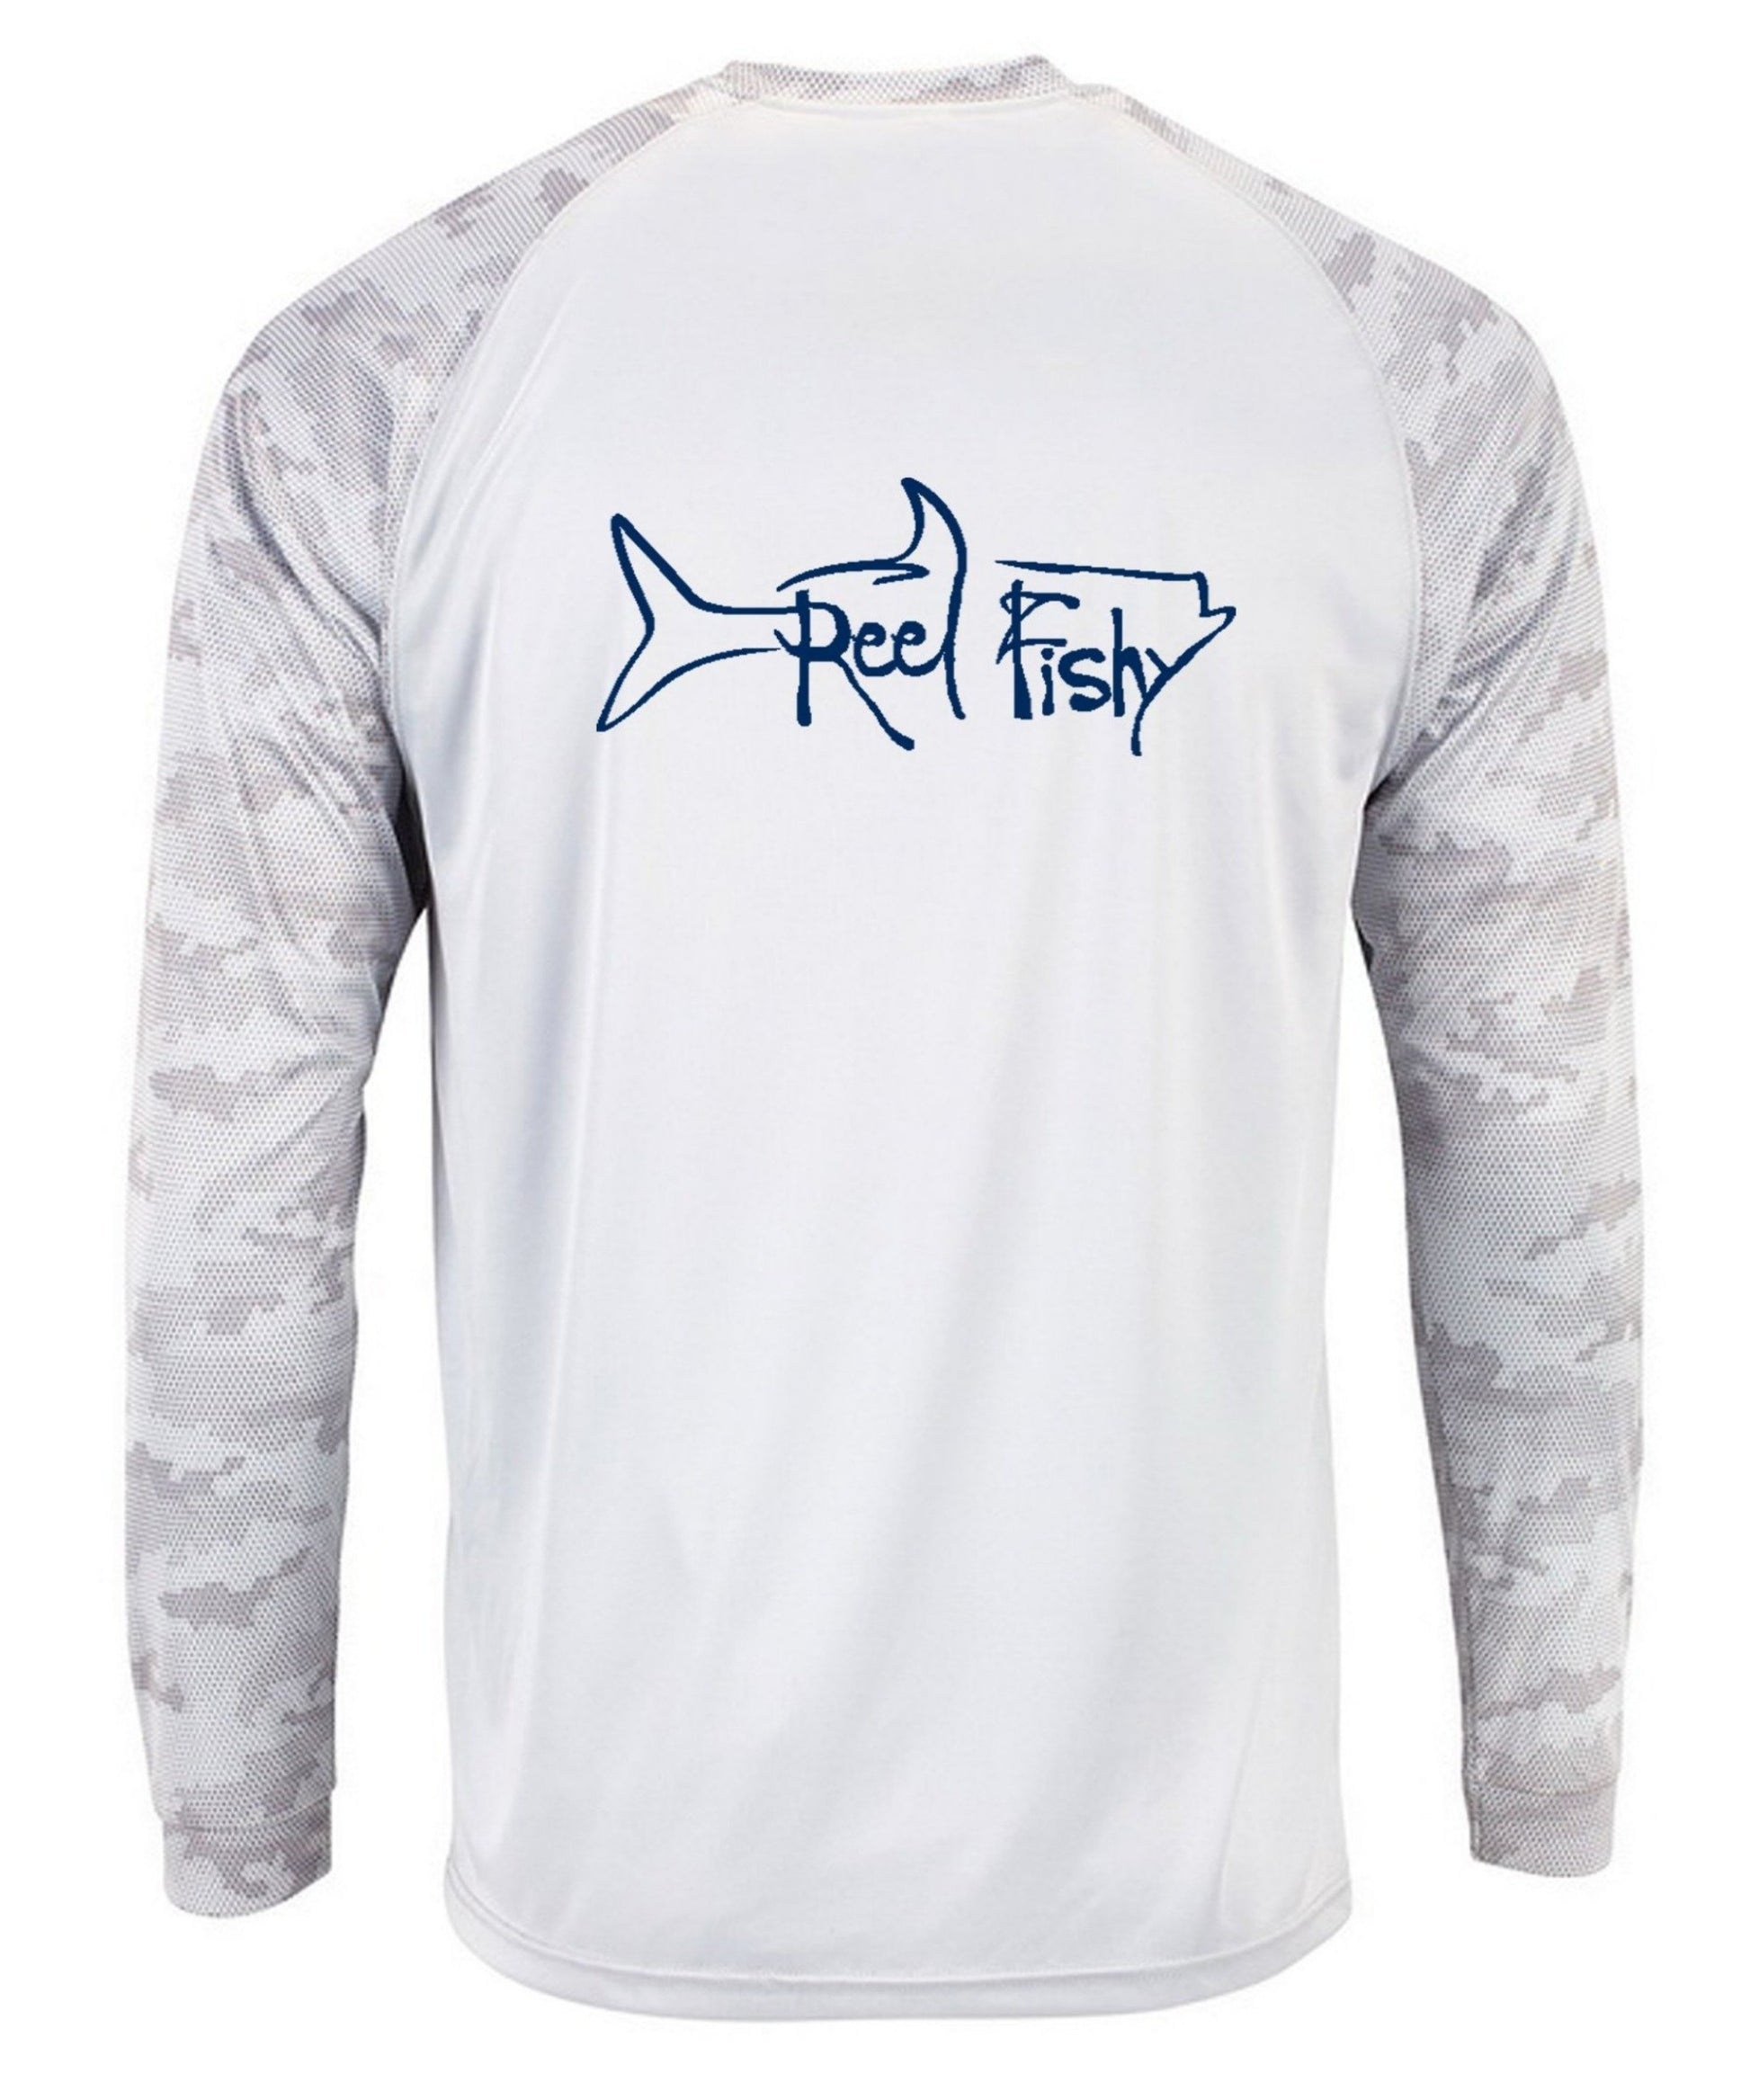 Tarpon Digital Camo Performance Dry-Fit Fishing Long Sleeve Shirts with 50+ UPF Sun Protection - White